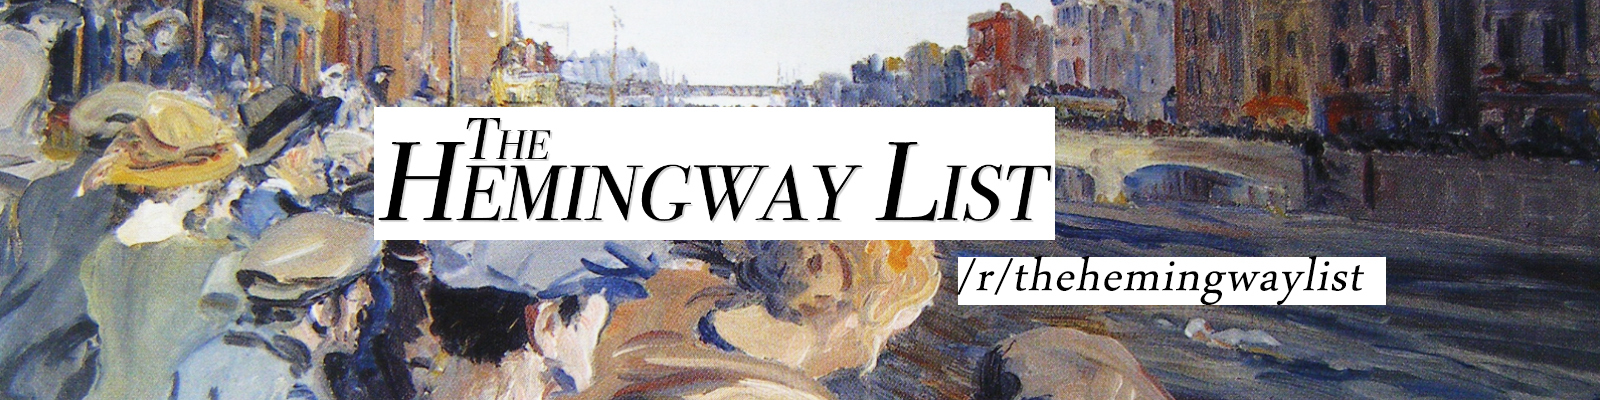 The Hemingway List